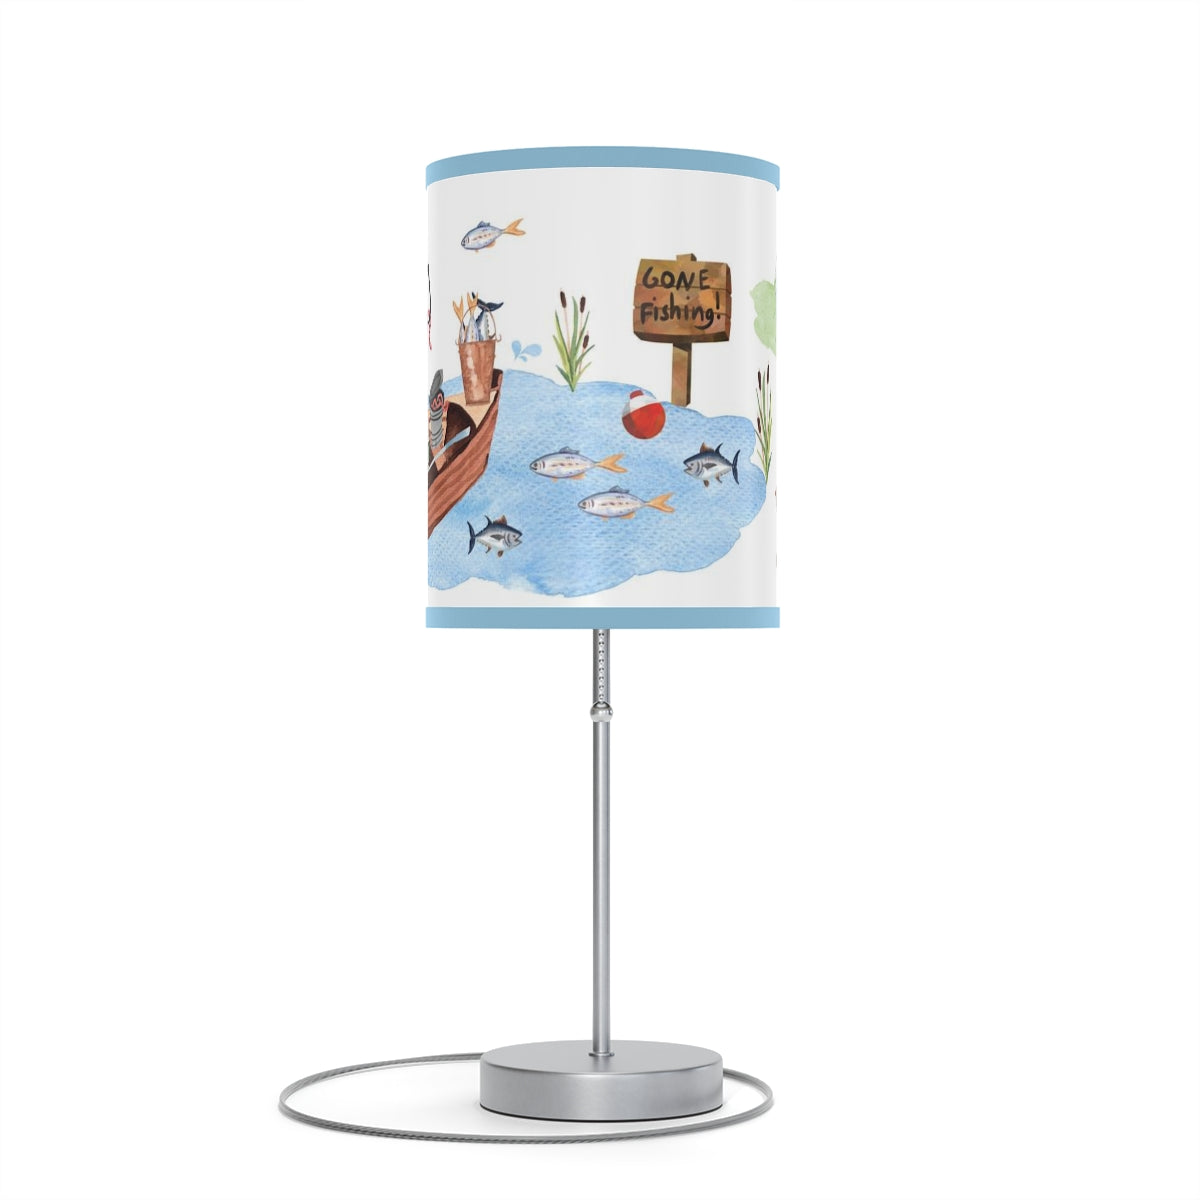 Fishing table lamp, Gone fishing nursery decor - Little Fisherman